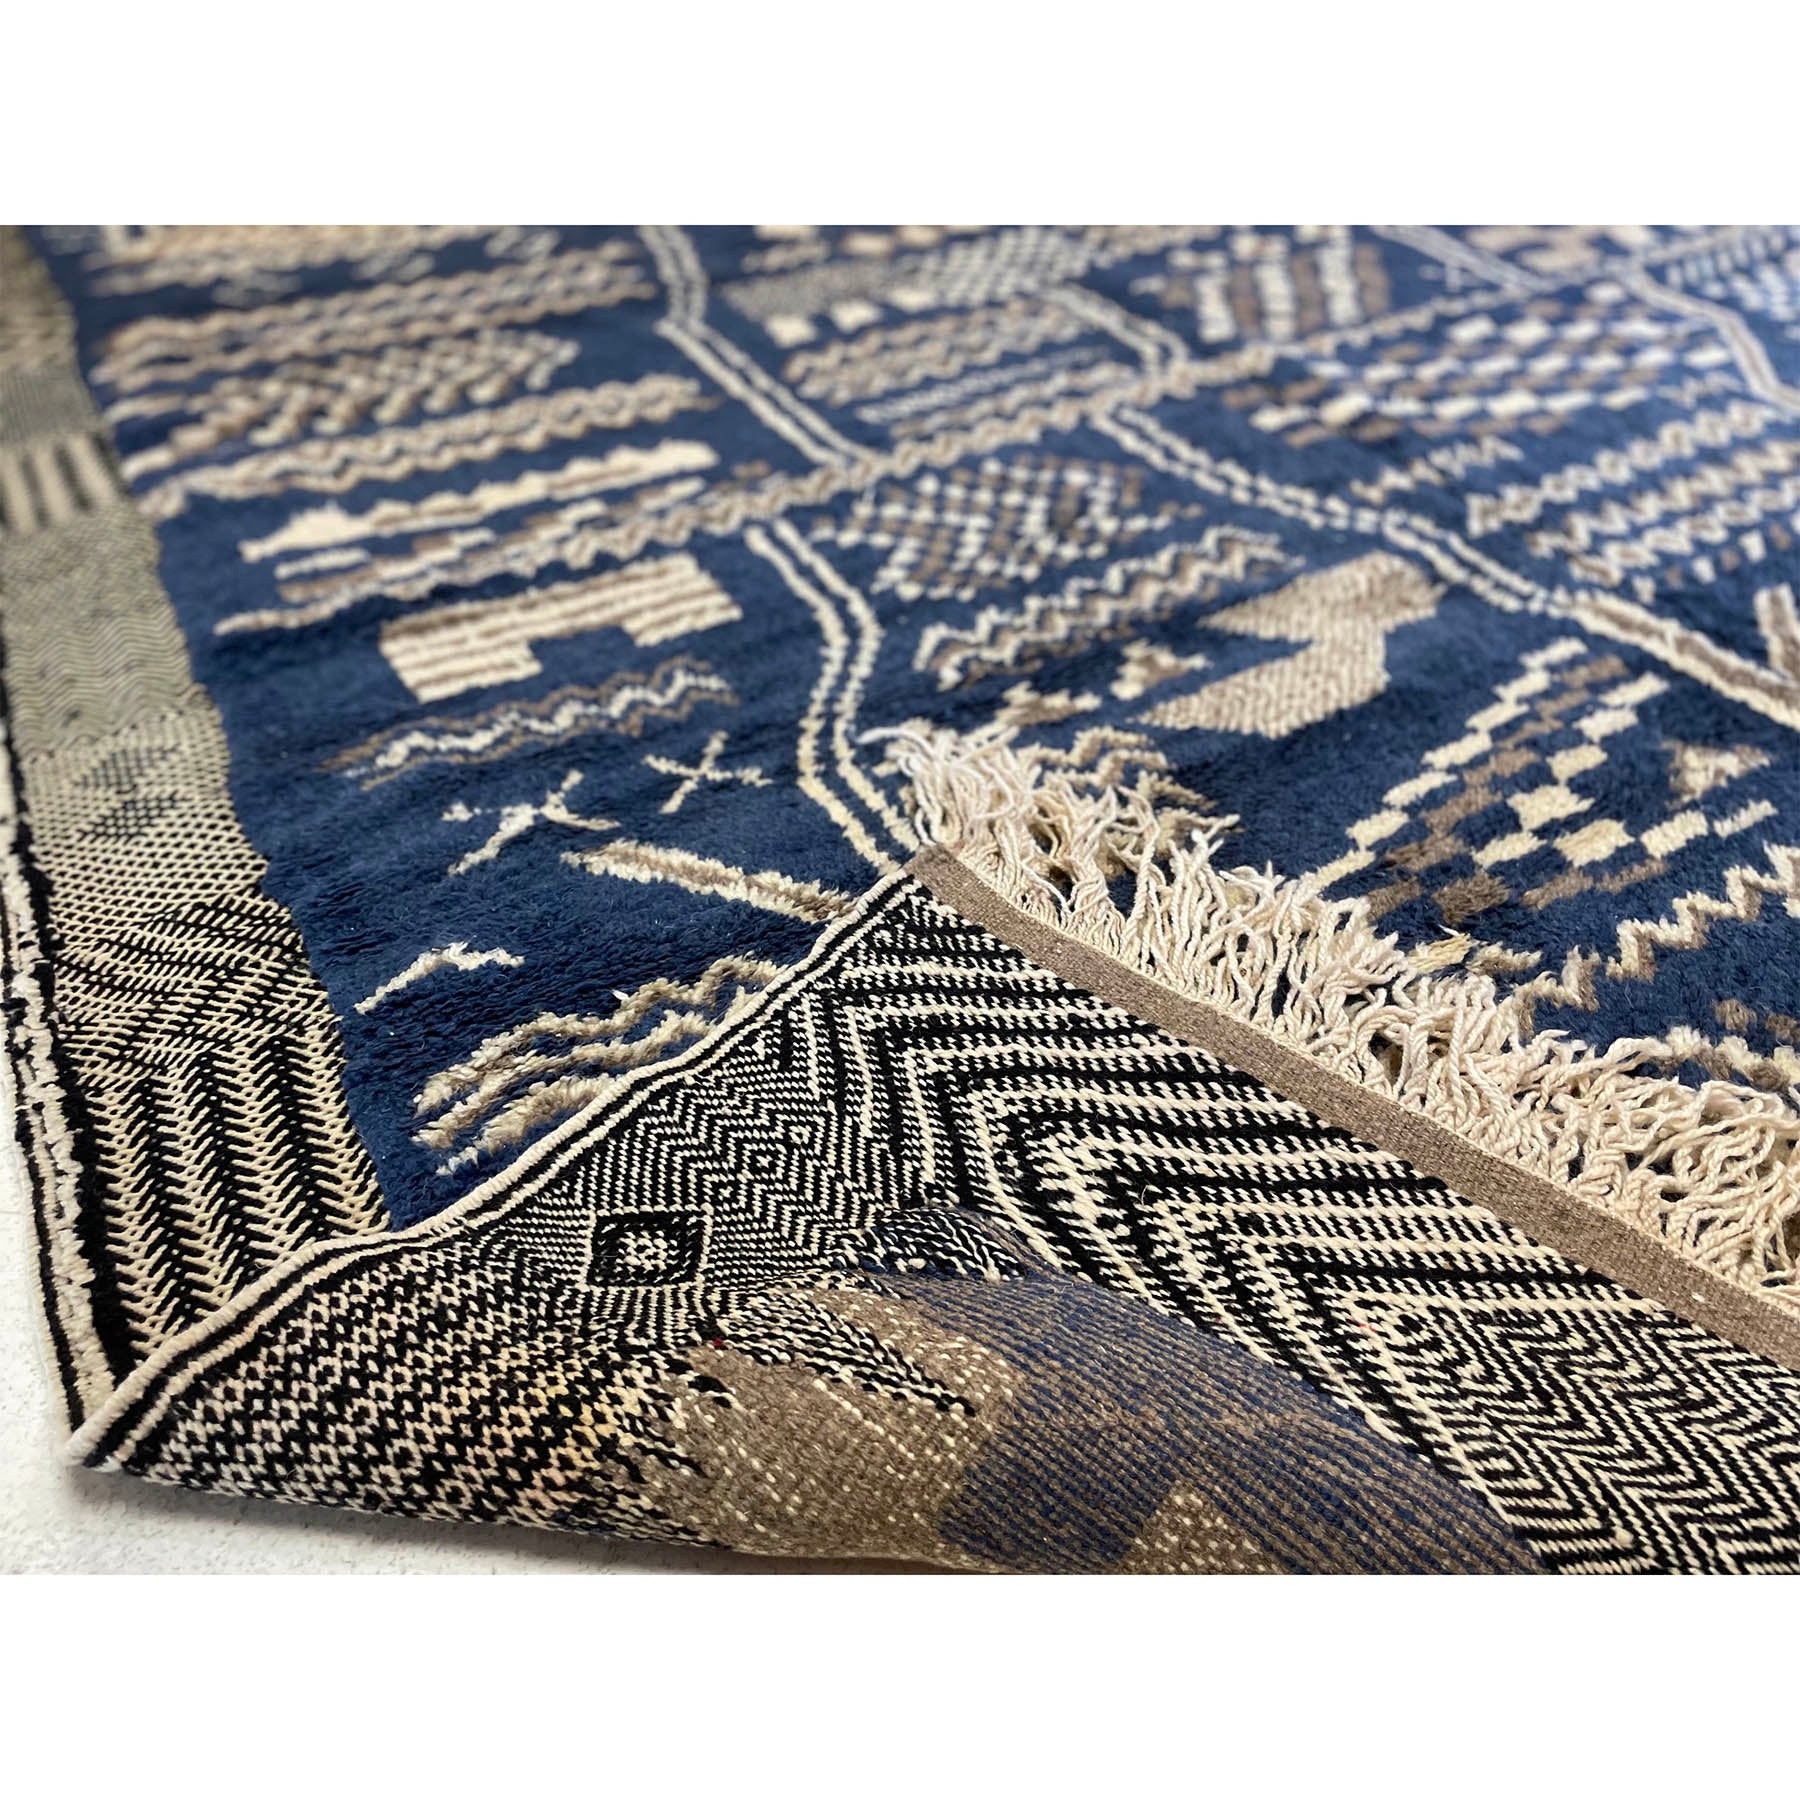 Plush mixed weave blue and gray Moroccan area rug - Kantara | Moroccan Rugs